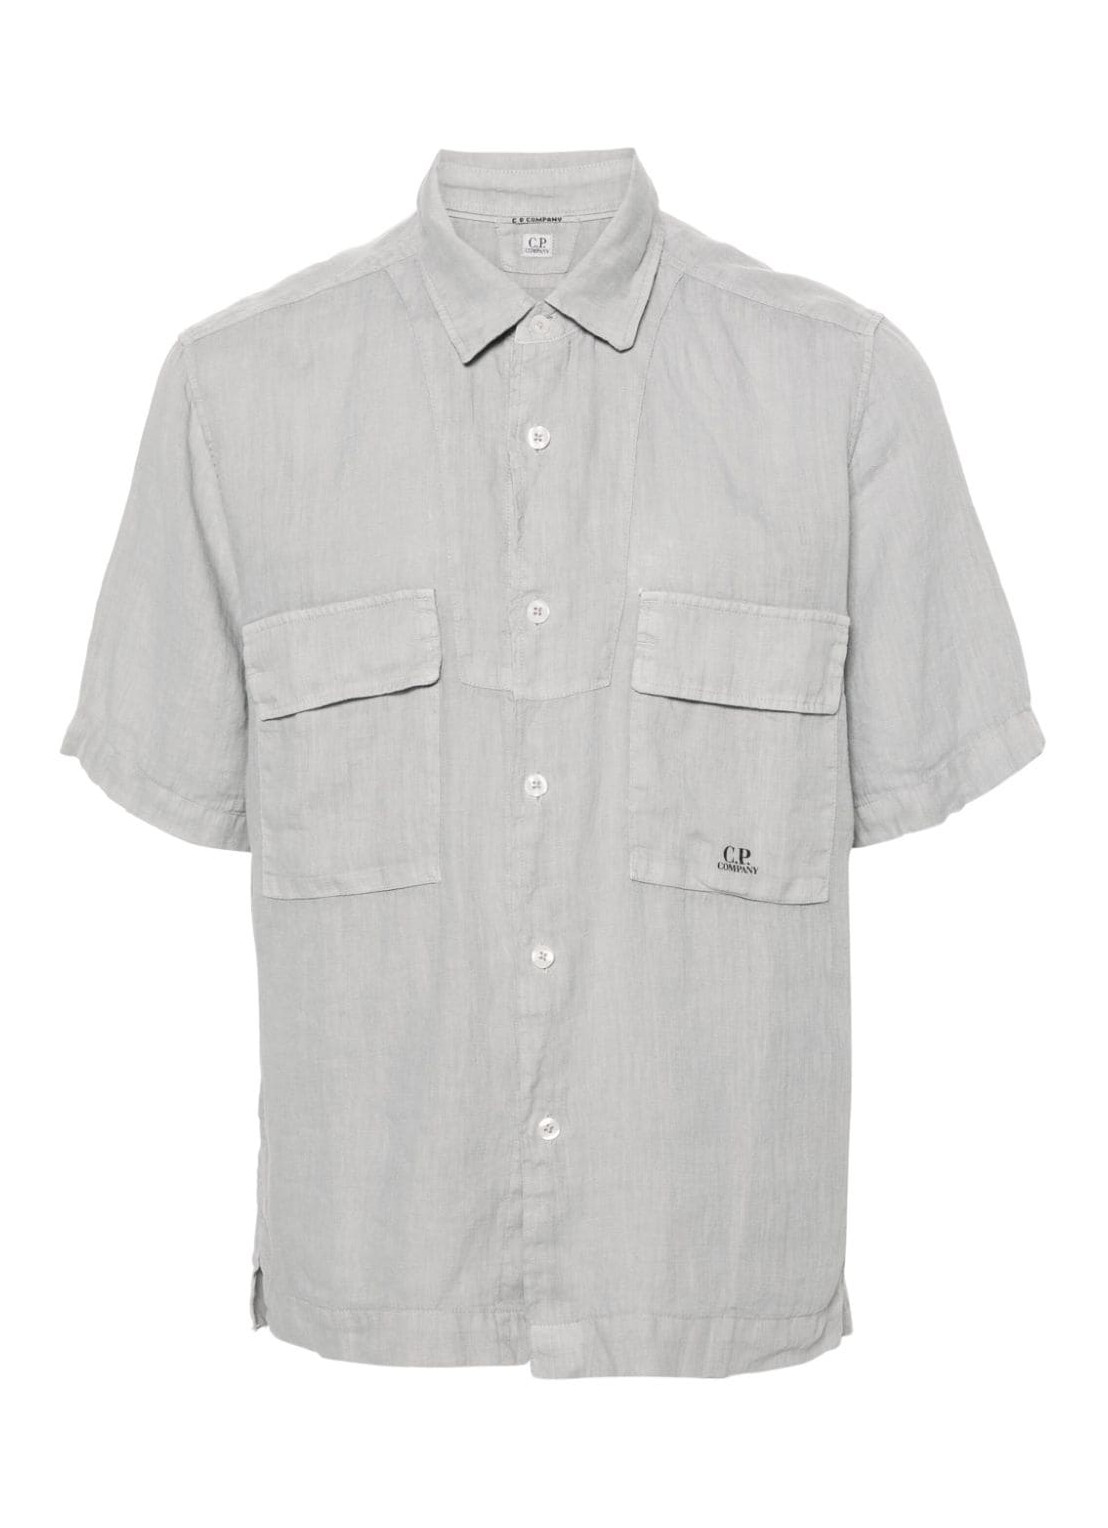 Camiseria c.p.company shirt manlinen short sleeved shirt - 16cmsh210a005415g 913 talla L
 